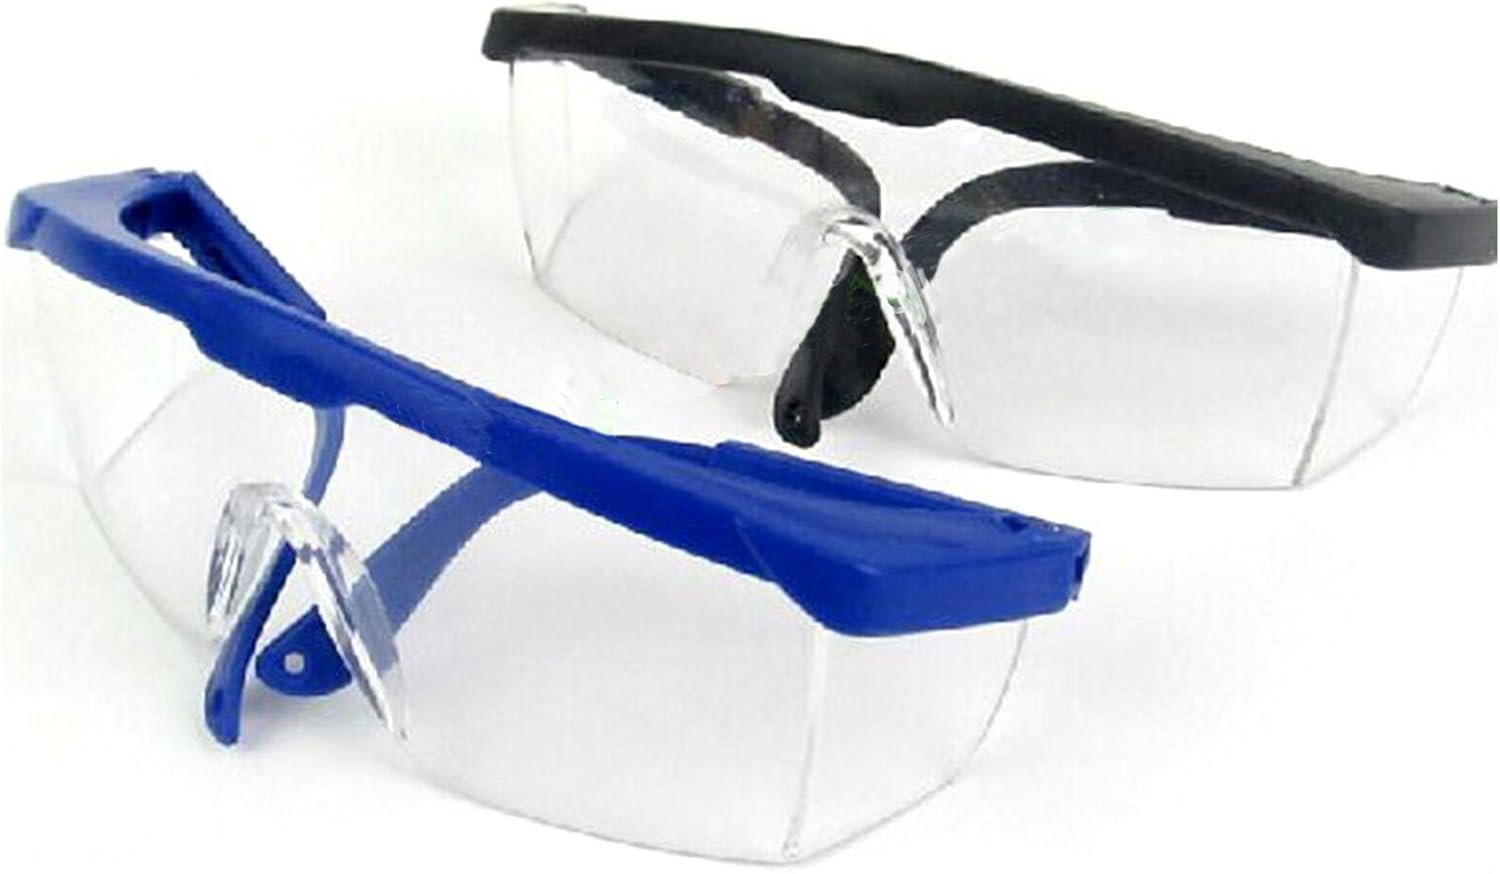 Yalulu Safety Glasses Review